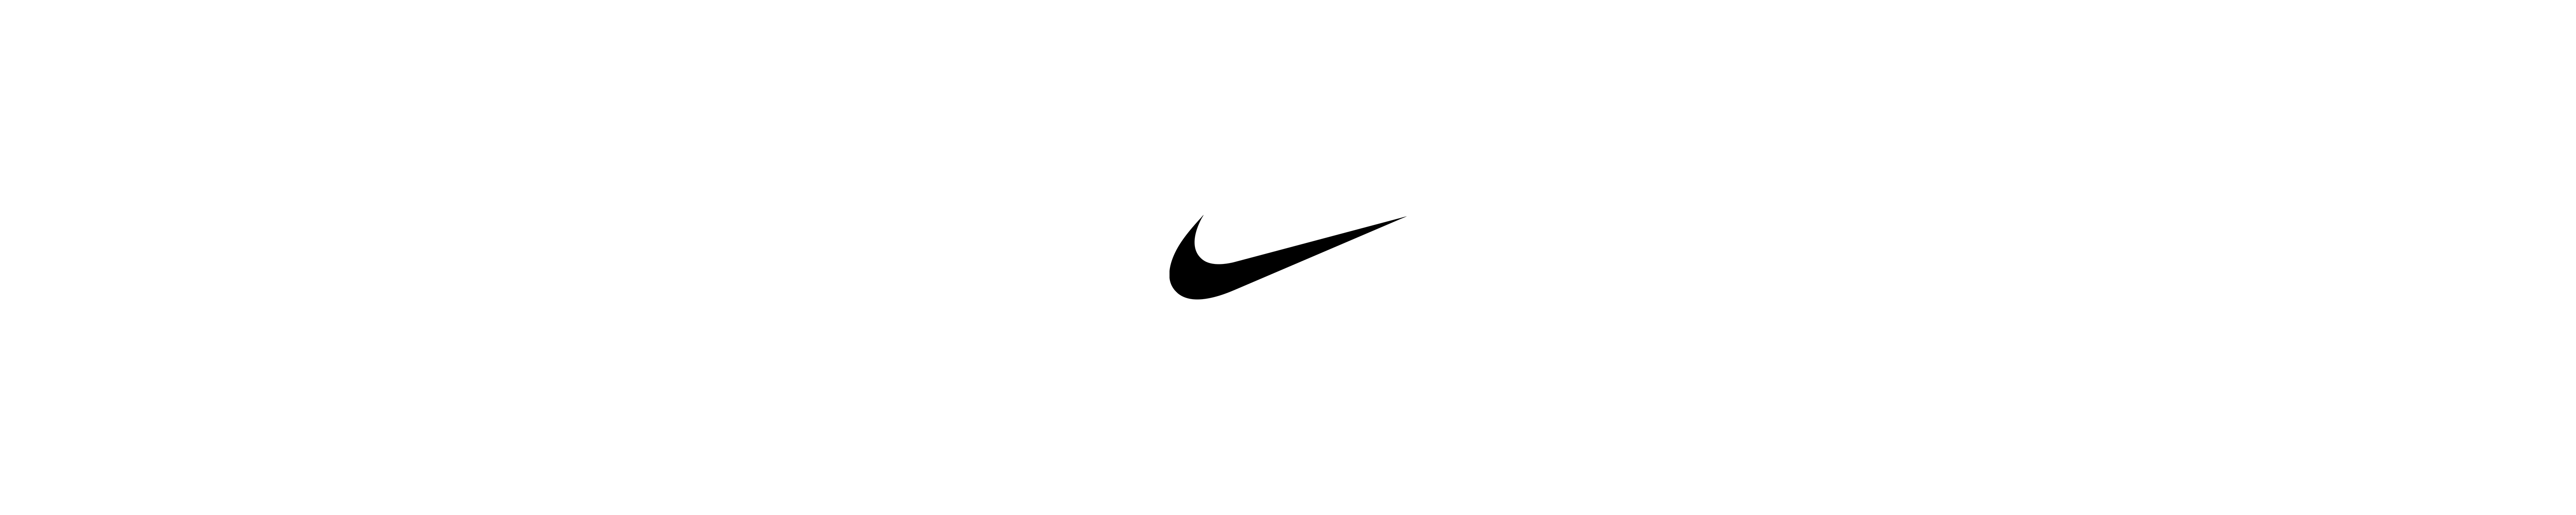 Who Does Nike Sponsor?